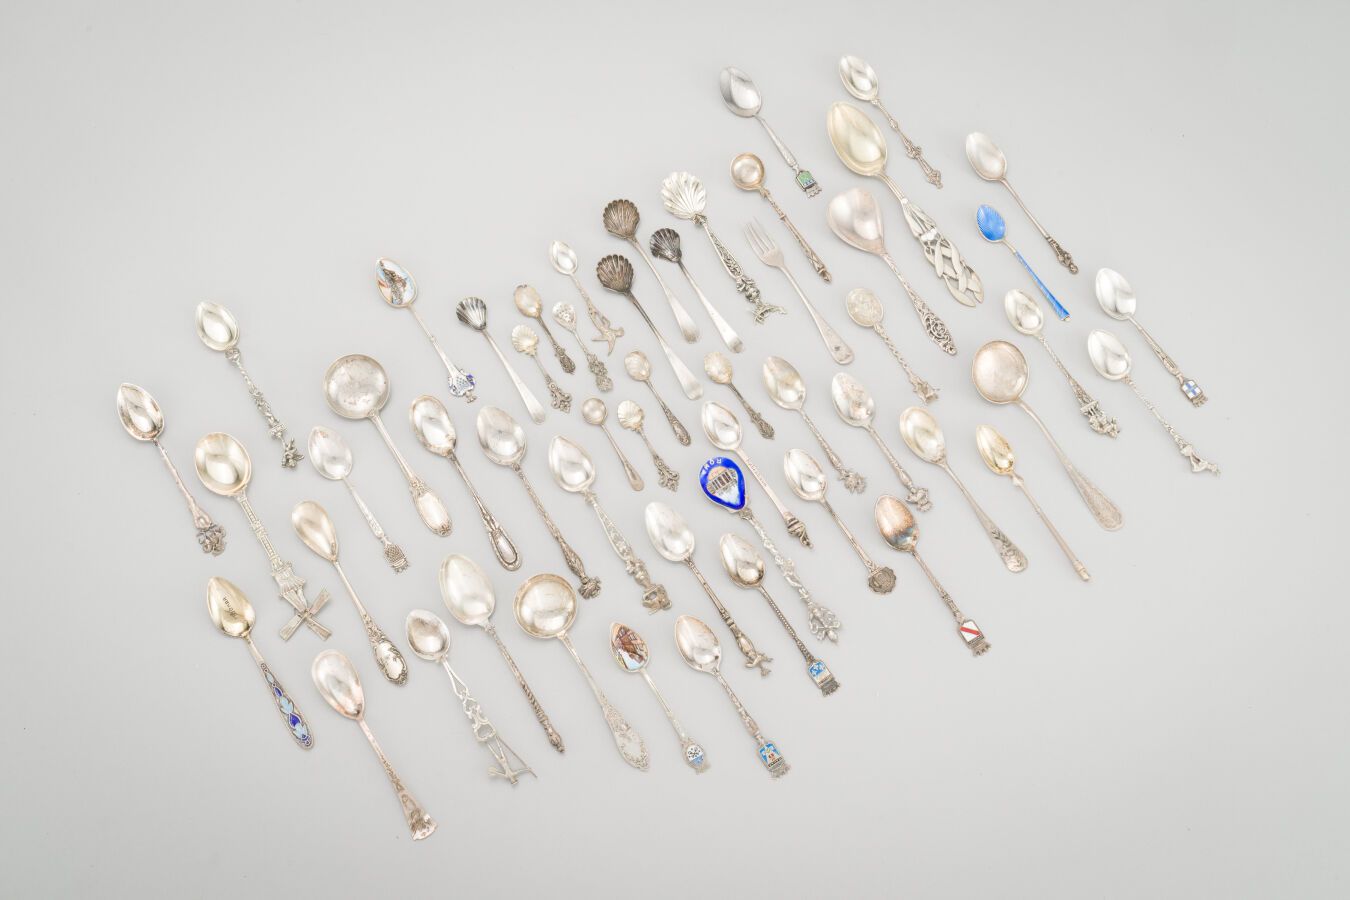 Null 58.由小勺子组成的银质拍品（800/1000）。

旅行纪念品，有些有珐琅彩装饰。

毛重：440克

一套银质勺子和叉子（800/1000）。

&hellip;